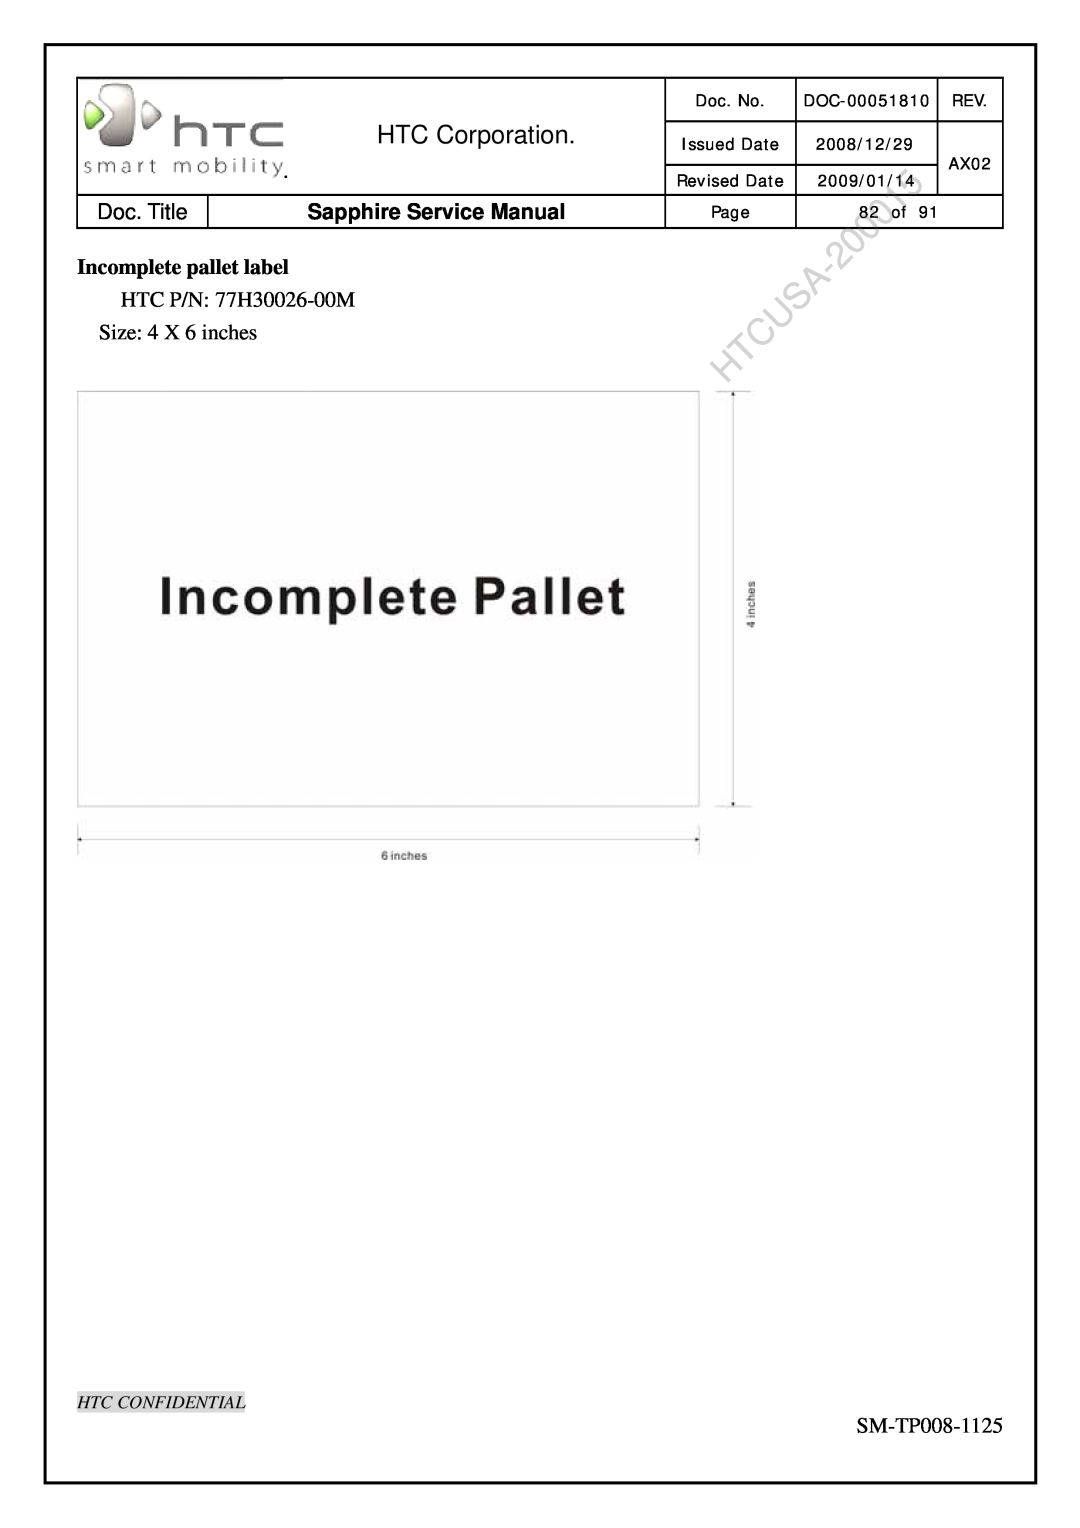 HTC SM-TP008-1125 Incomplete pallet label, HTC Corporation, Sapphire Service Manual, Htc Confidential, Doc. No, 82 of 